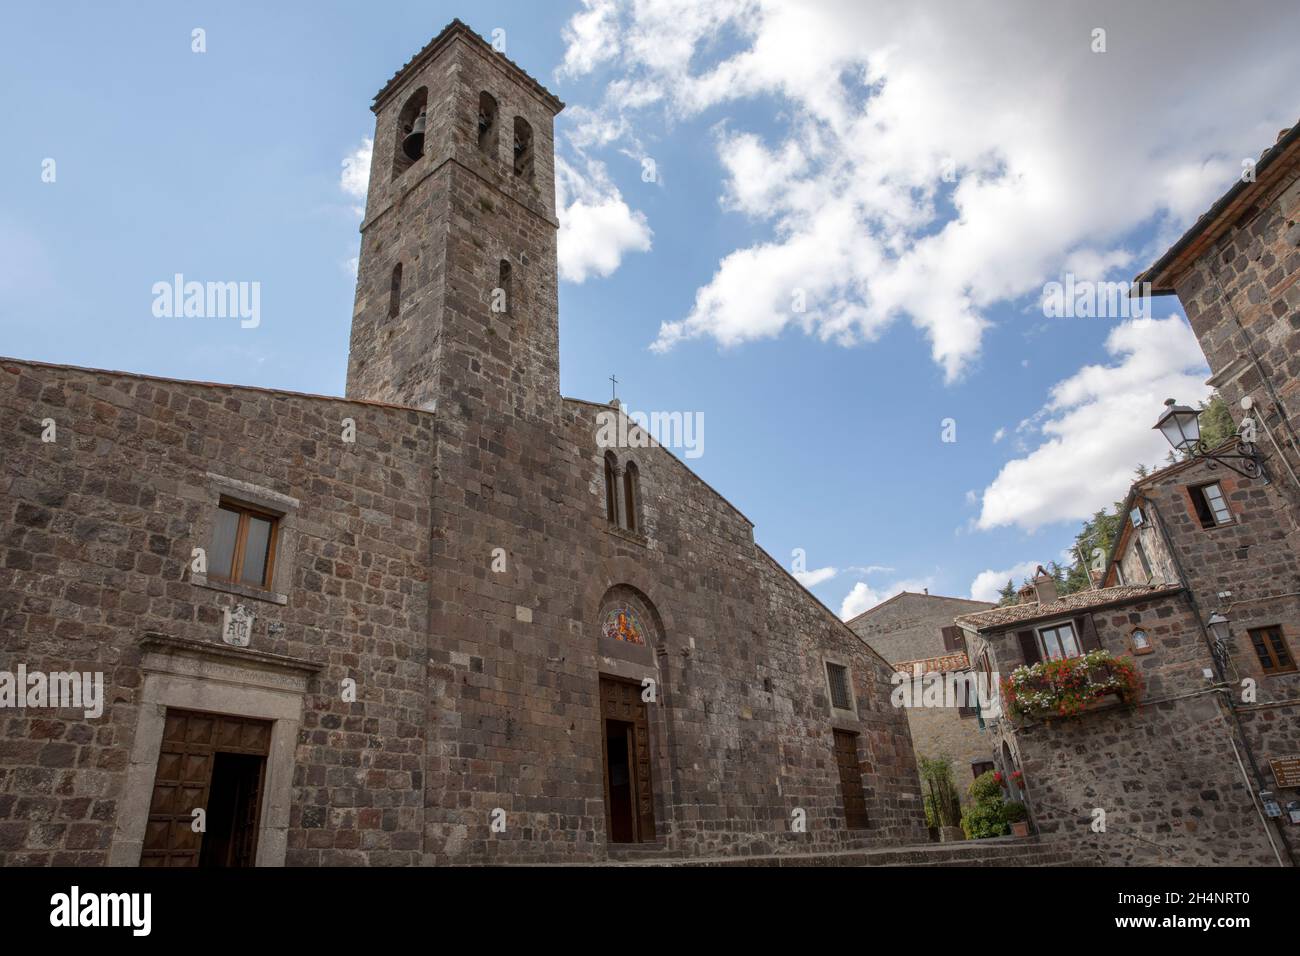 Fachada de la iglesia de San Pietro en el pueblo de Radicofani, Toscana, Italia Foto de stock